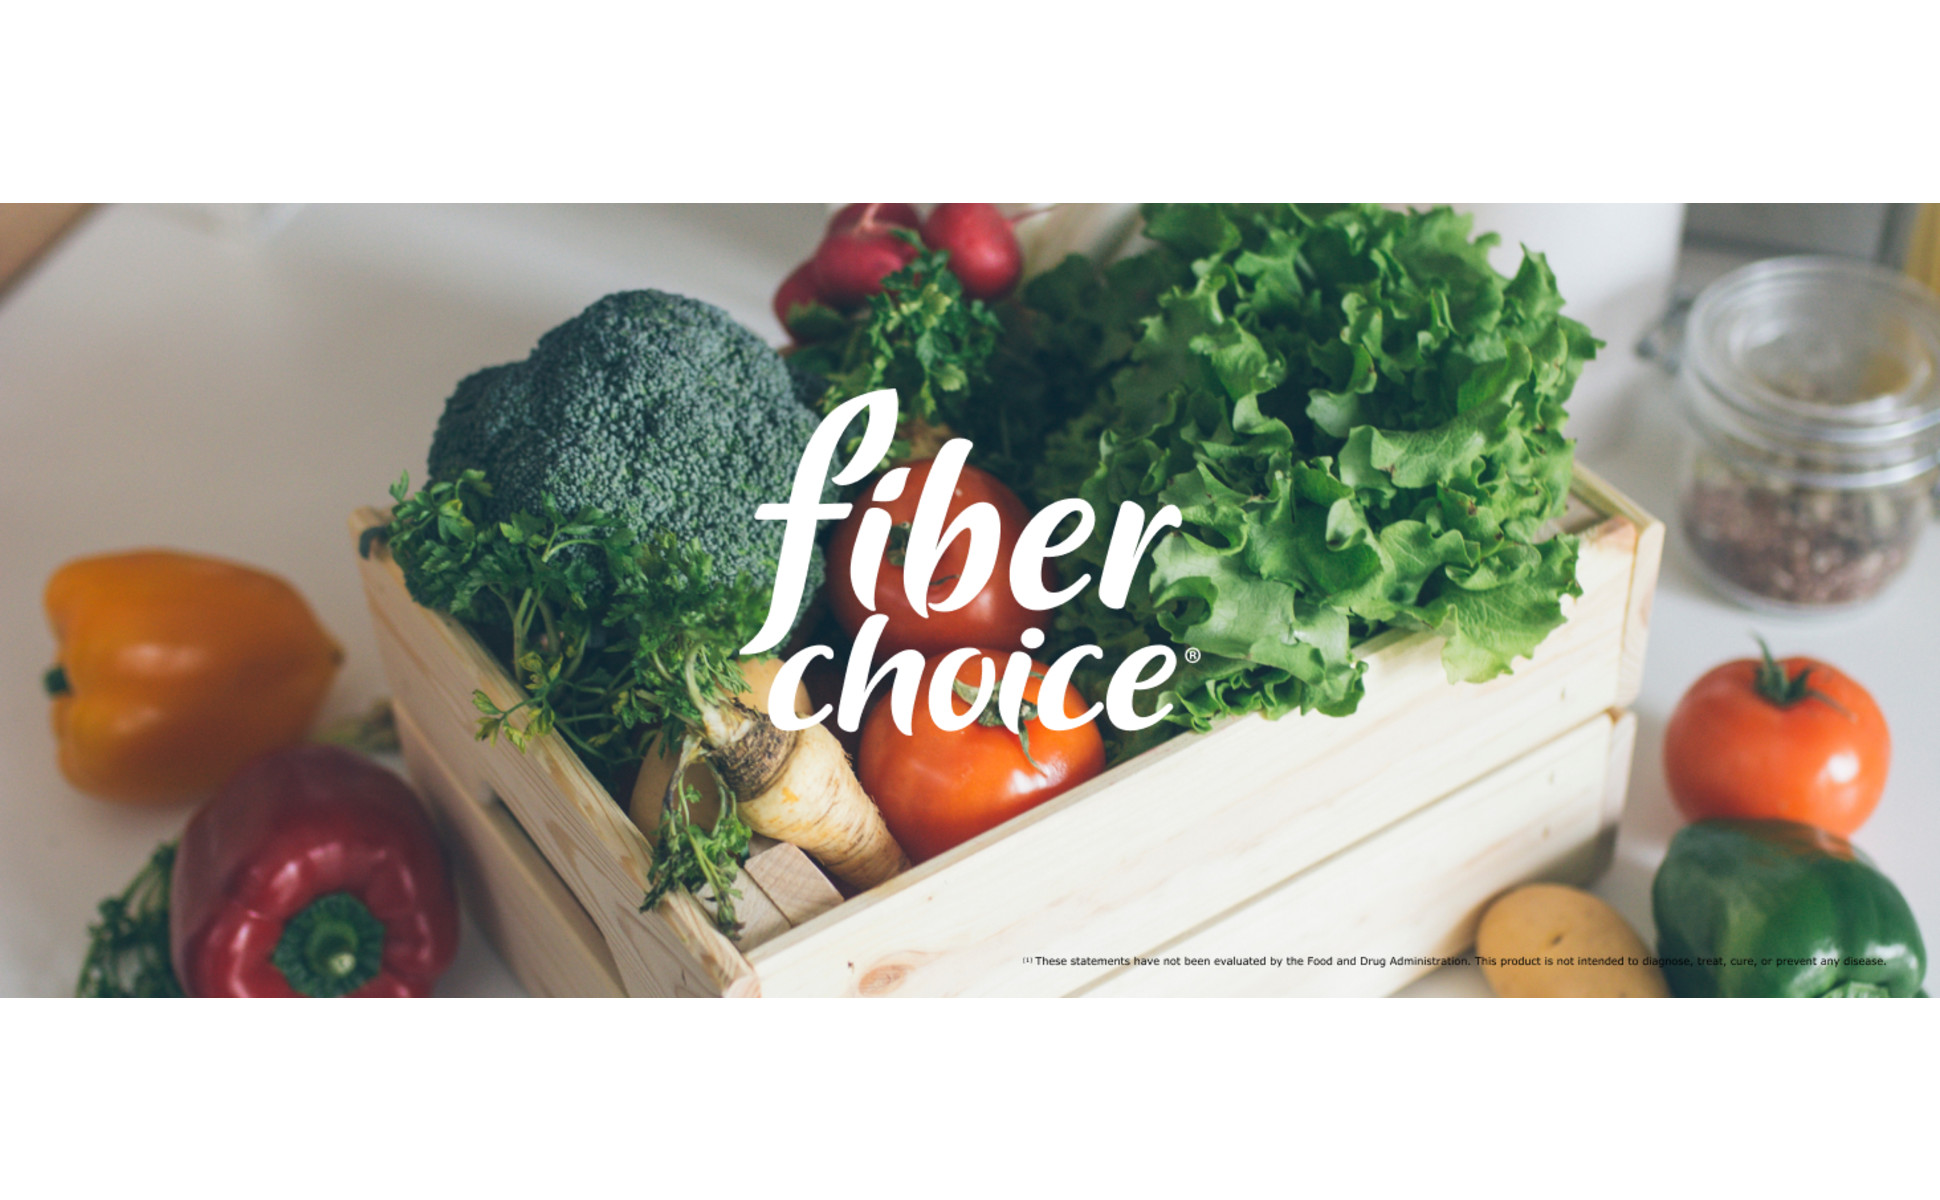 Fiber Choice Fruity Bites, Metabolism & Energy, Gummies, Assorted Tropical  Fruit, Medicine Cabinet